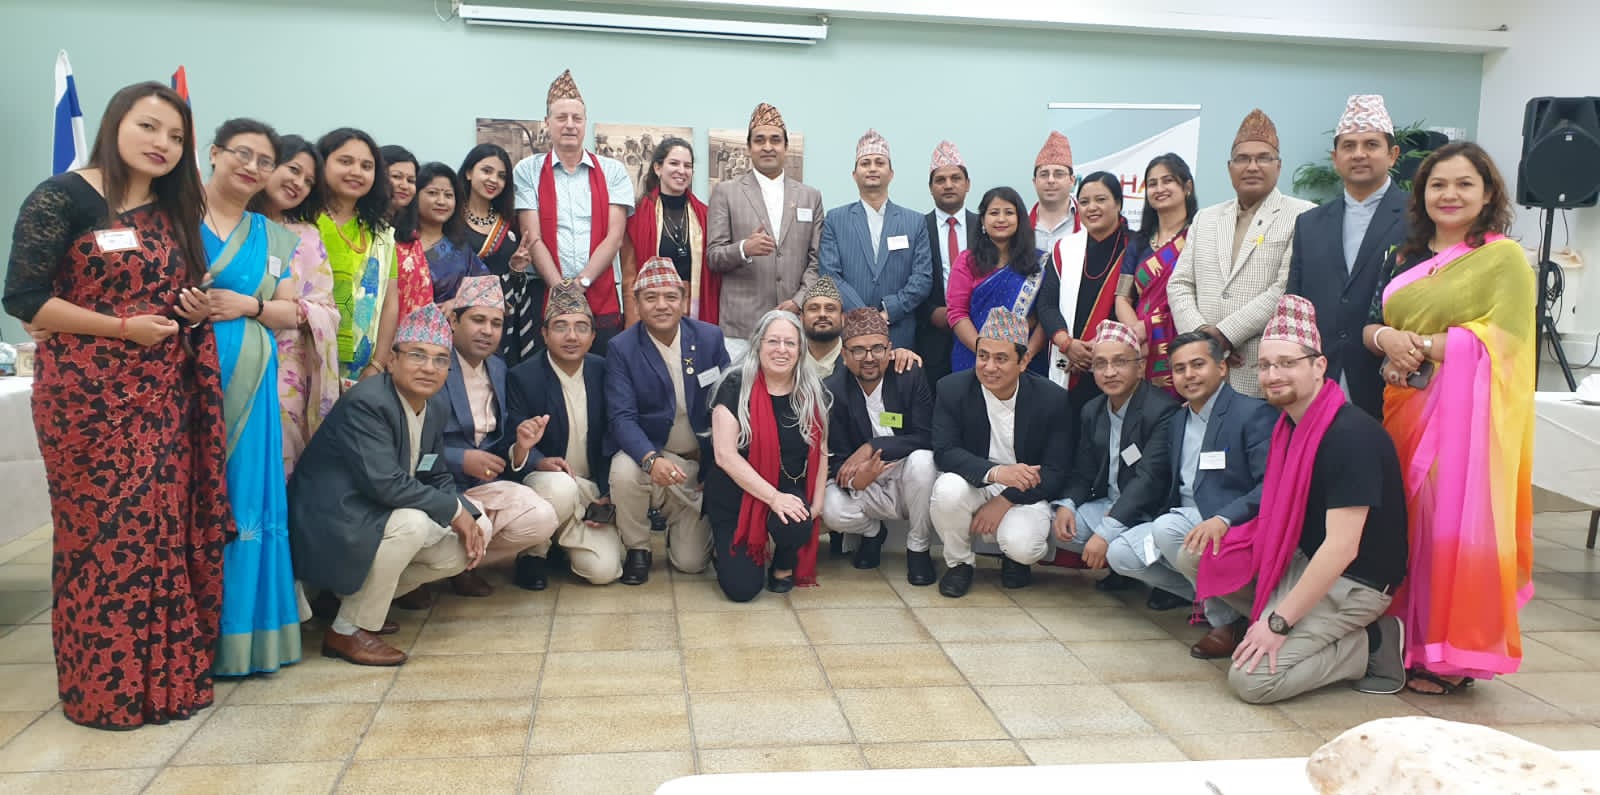 26 Nepalis attended educational MASHAV training in Israel